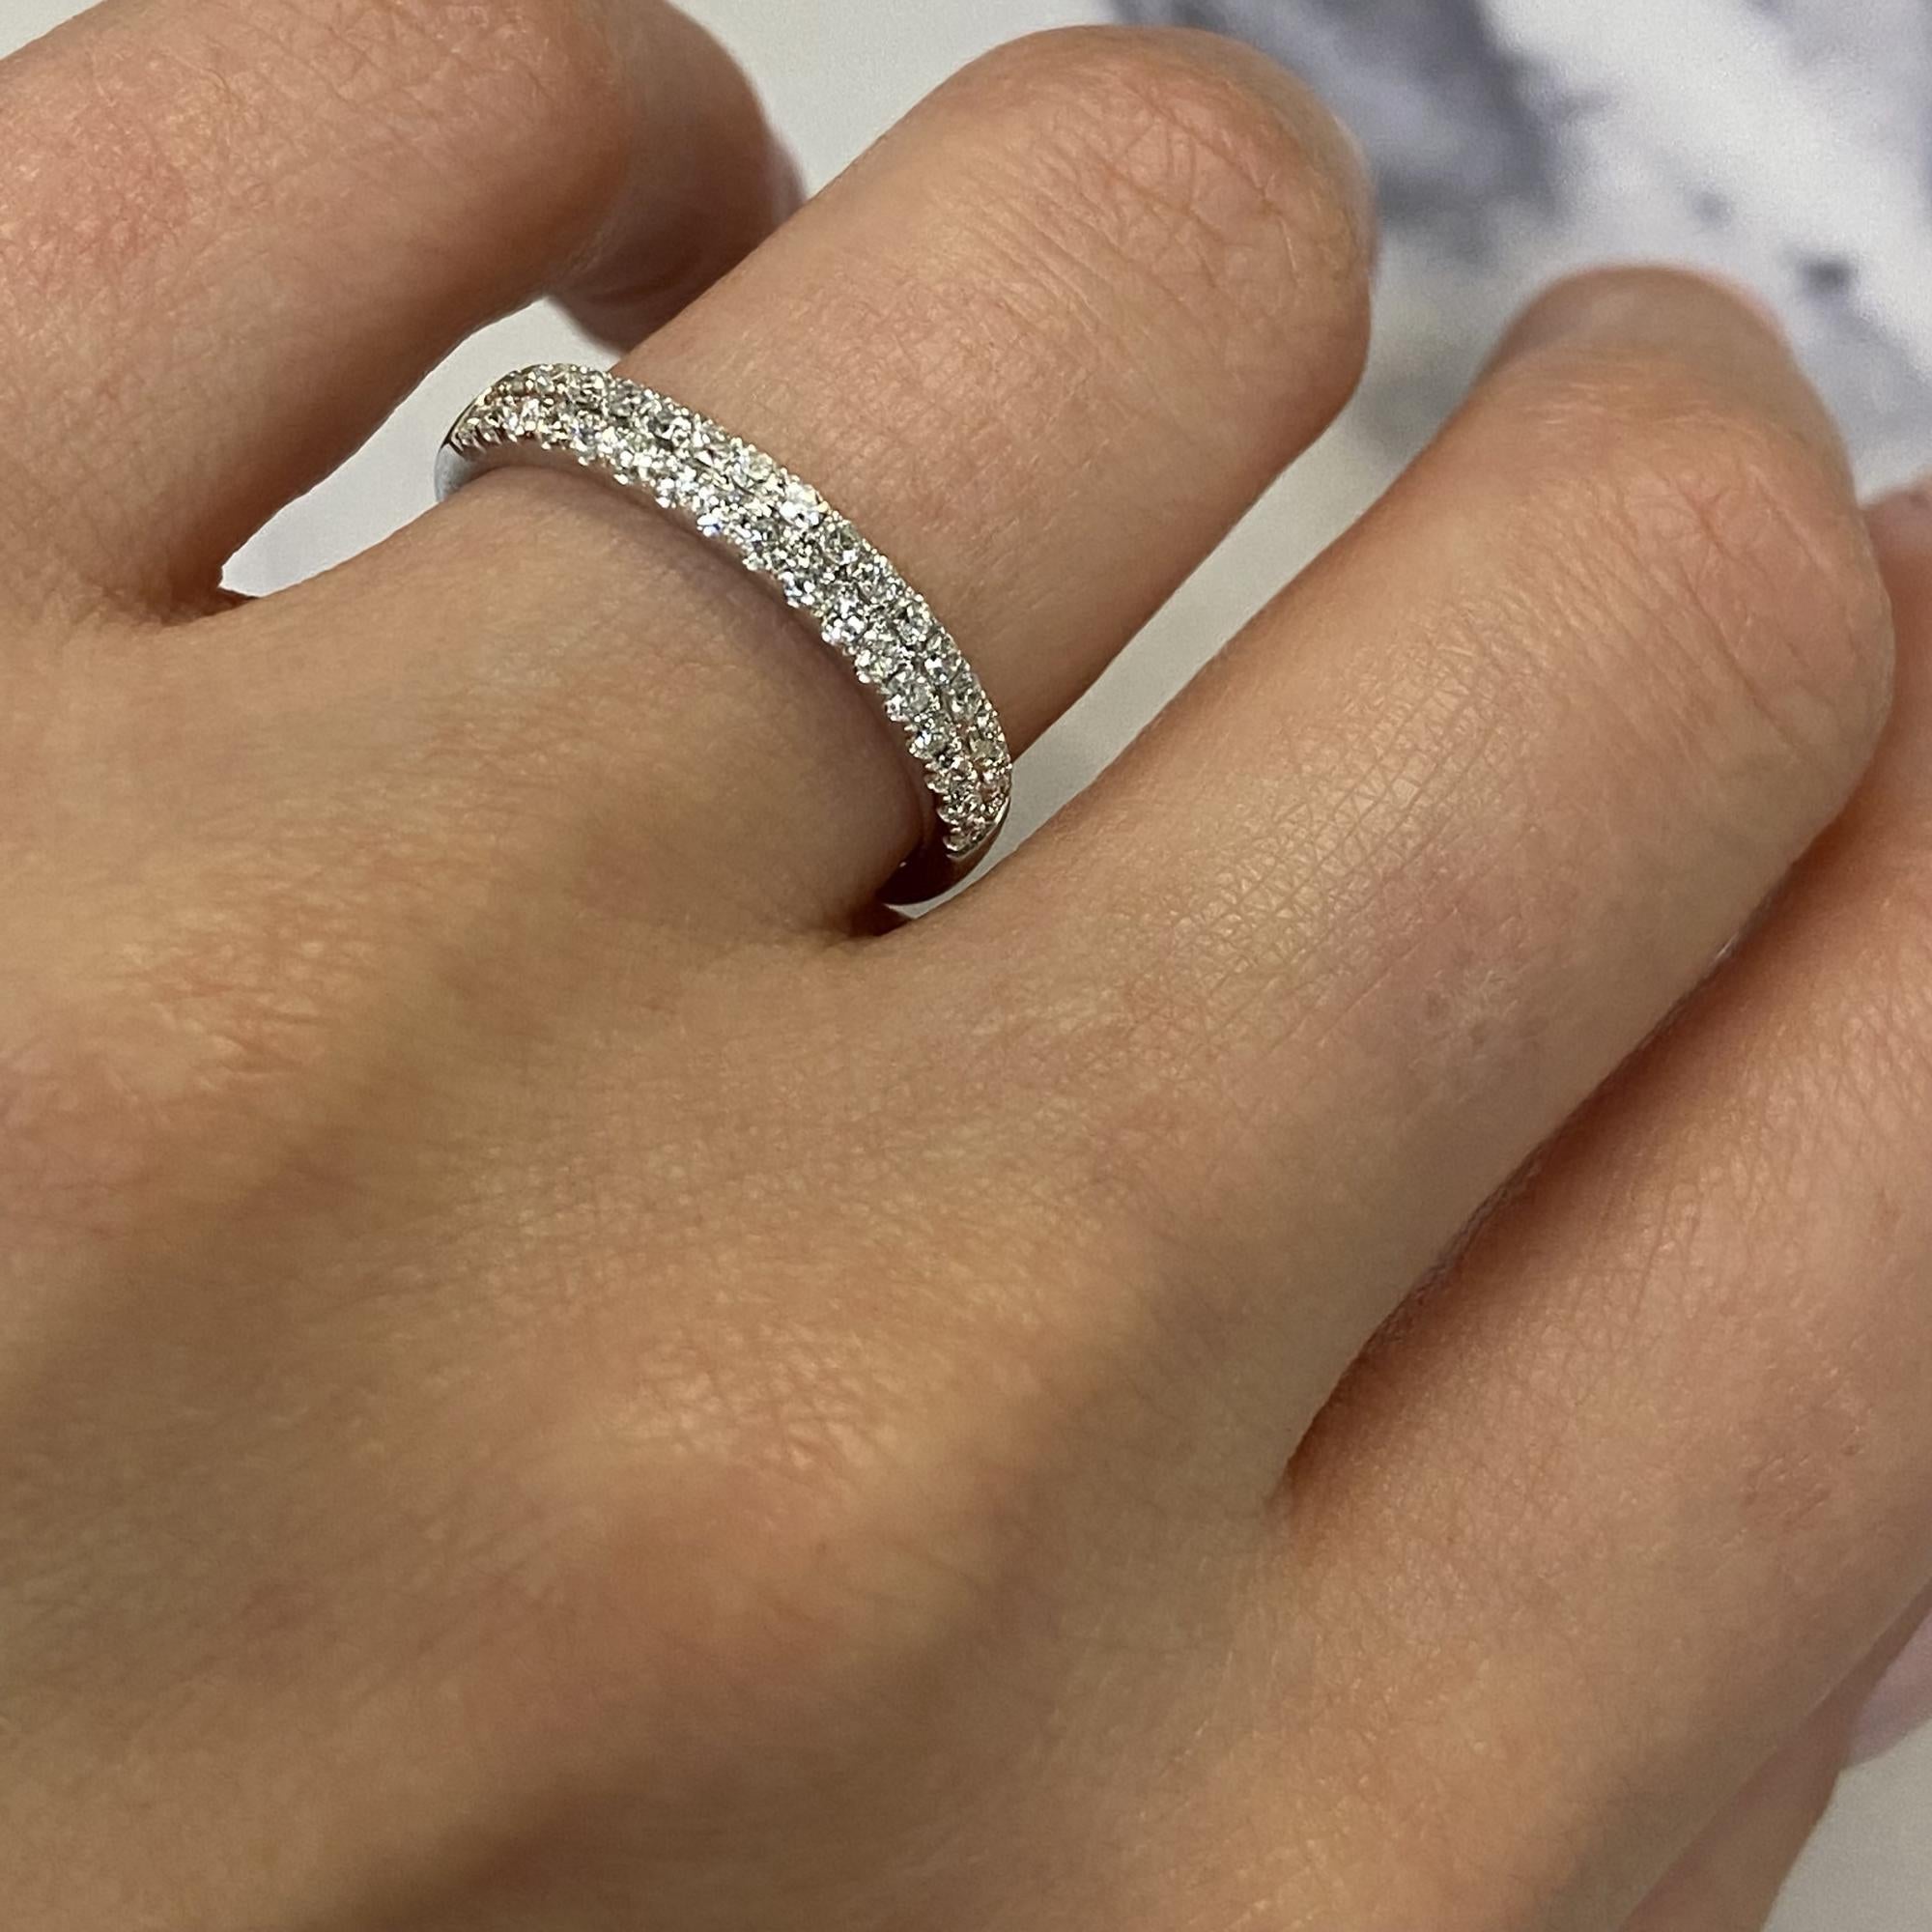 Round Cut Rachel Koen Double Row Pave Diamond Wedding Band Ring 14k White Gold 0.37cttw For Sale